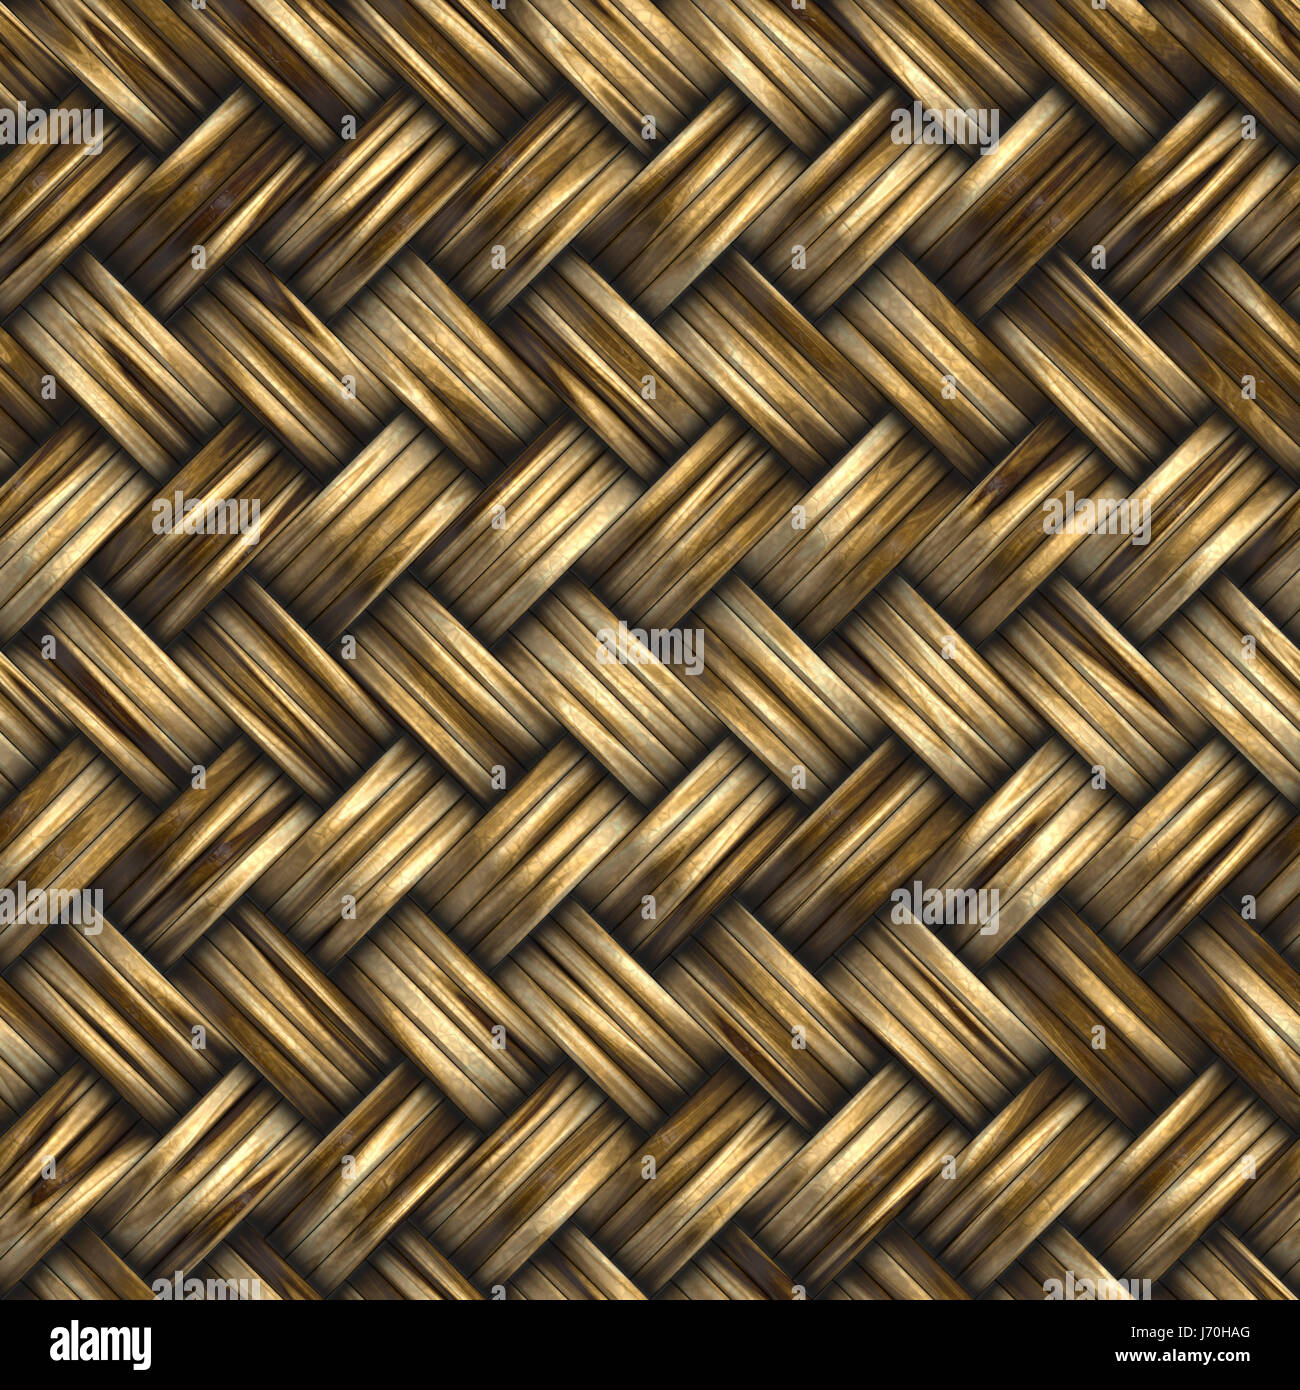 Legno basket weave tessuto di bambù di legno di legno di vimini basket weave astratto di bambù Foto Stock